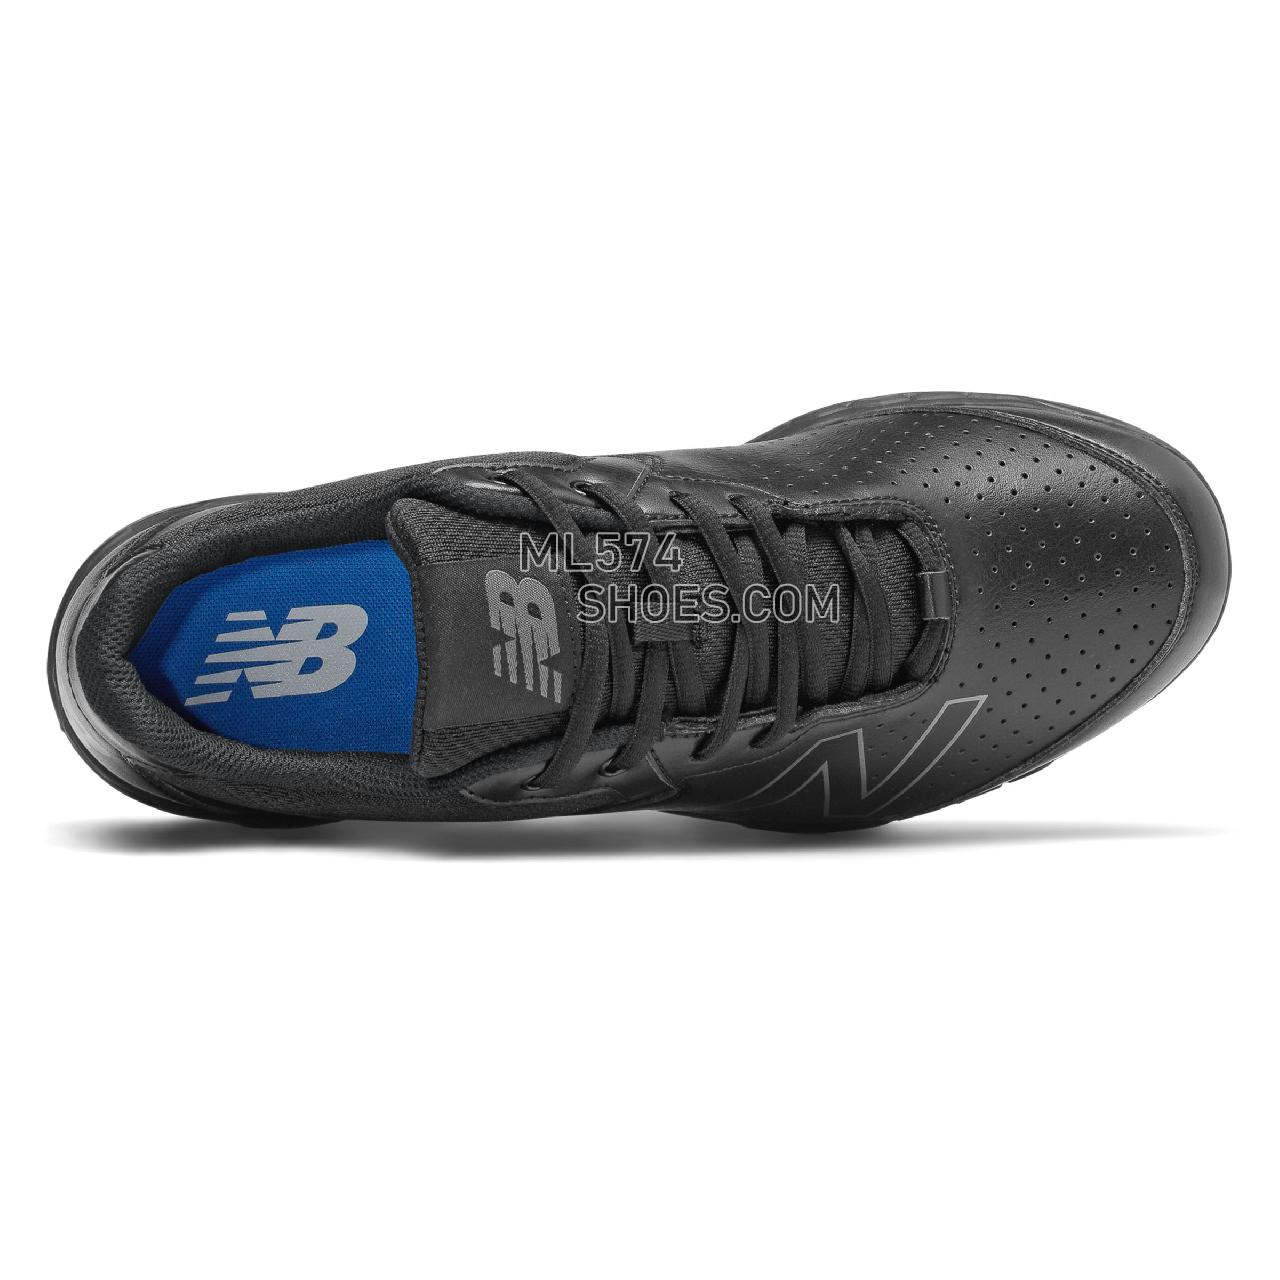 New Balance Fresh Foam 950v3 Low-Cut Field - Men's Umpire Footwear - Black with Black Caviar - MU950AK3